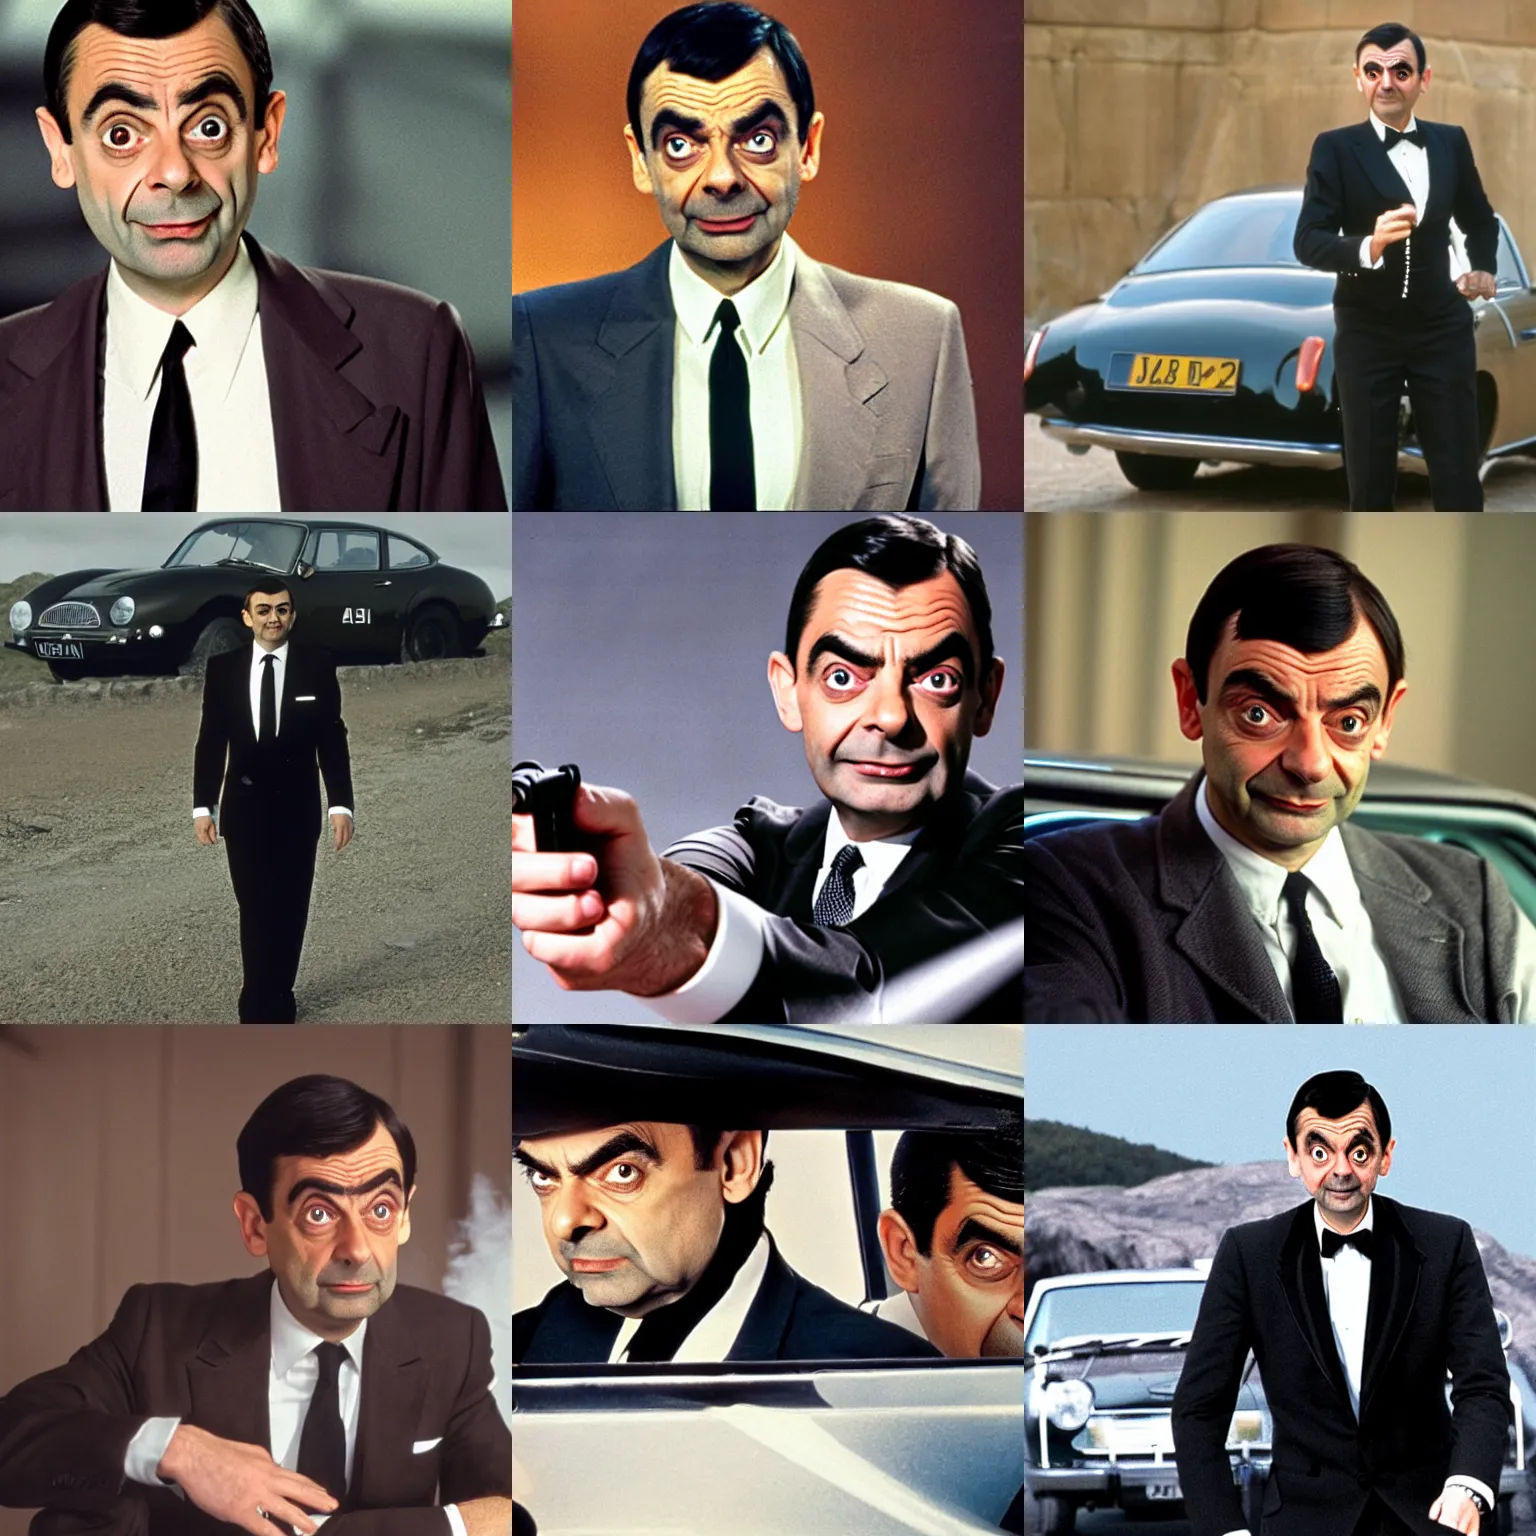 Prompt: Mr. Bean as James Bond